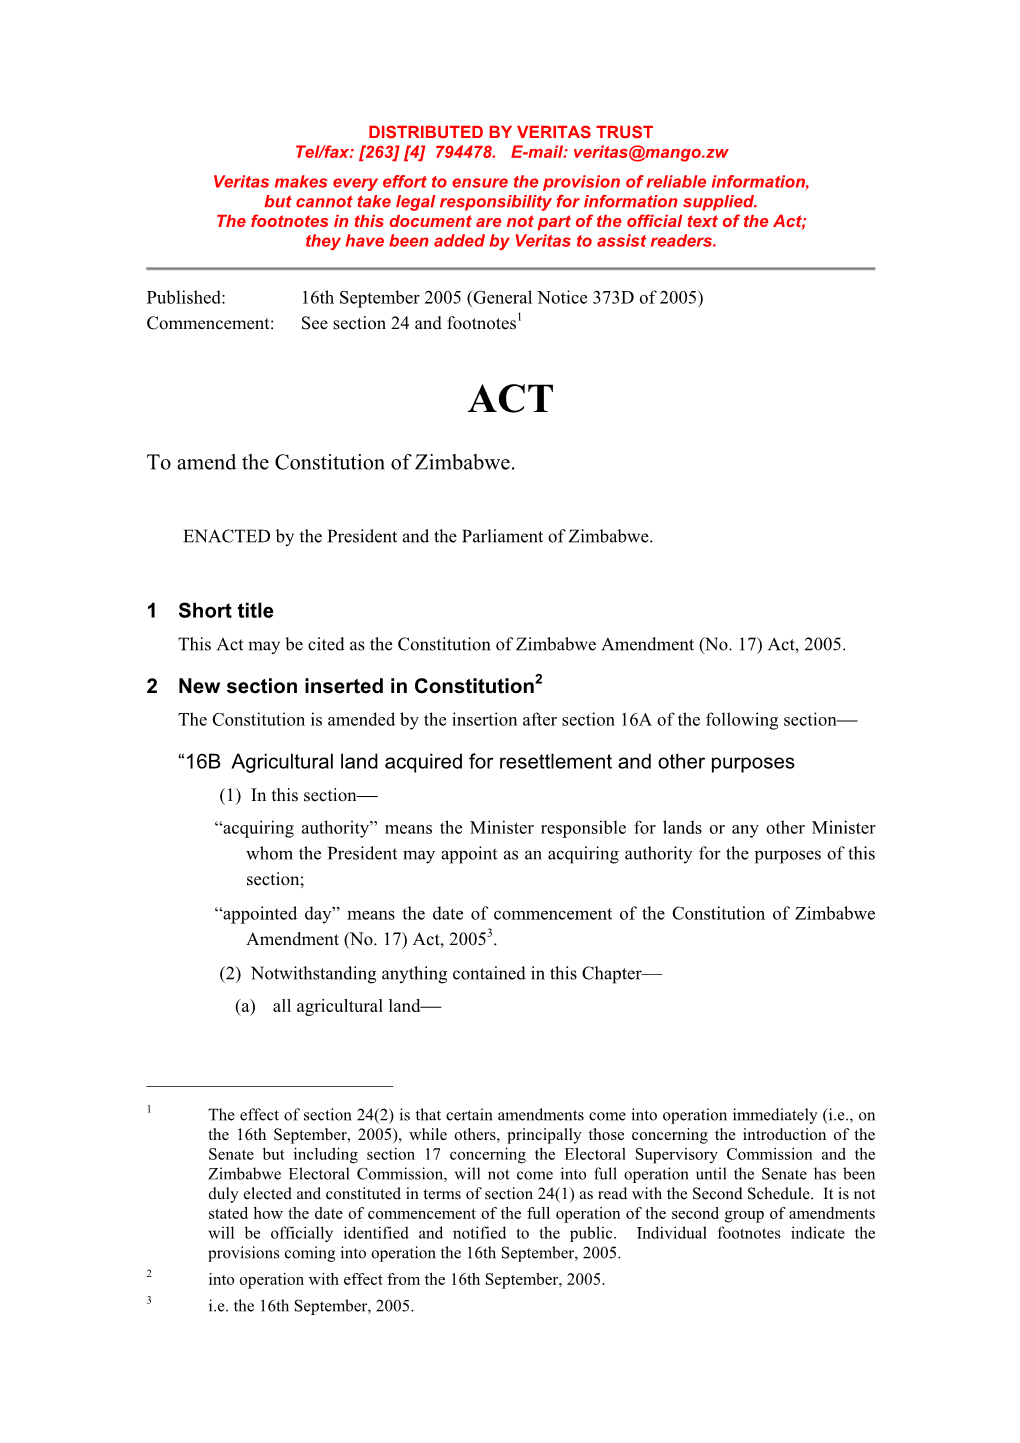 Constitution of Zimbabwe Amendment (No. 17) Actl, 2005